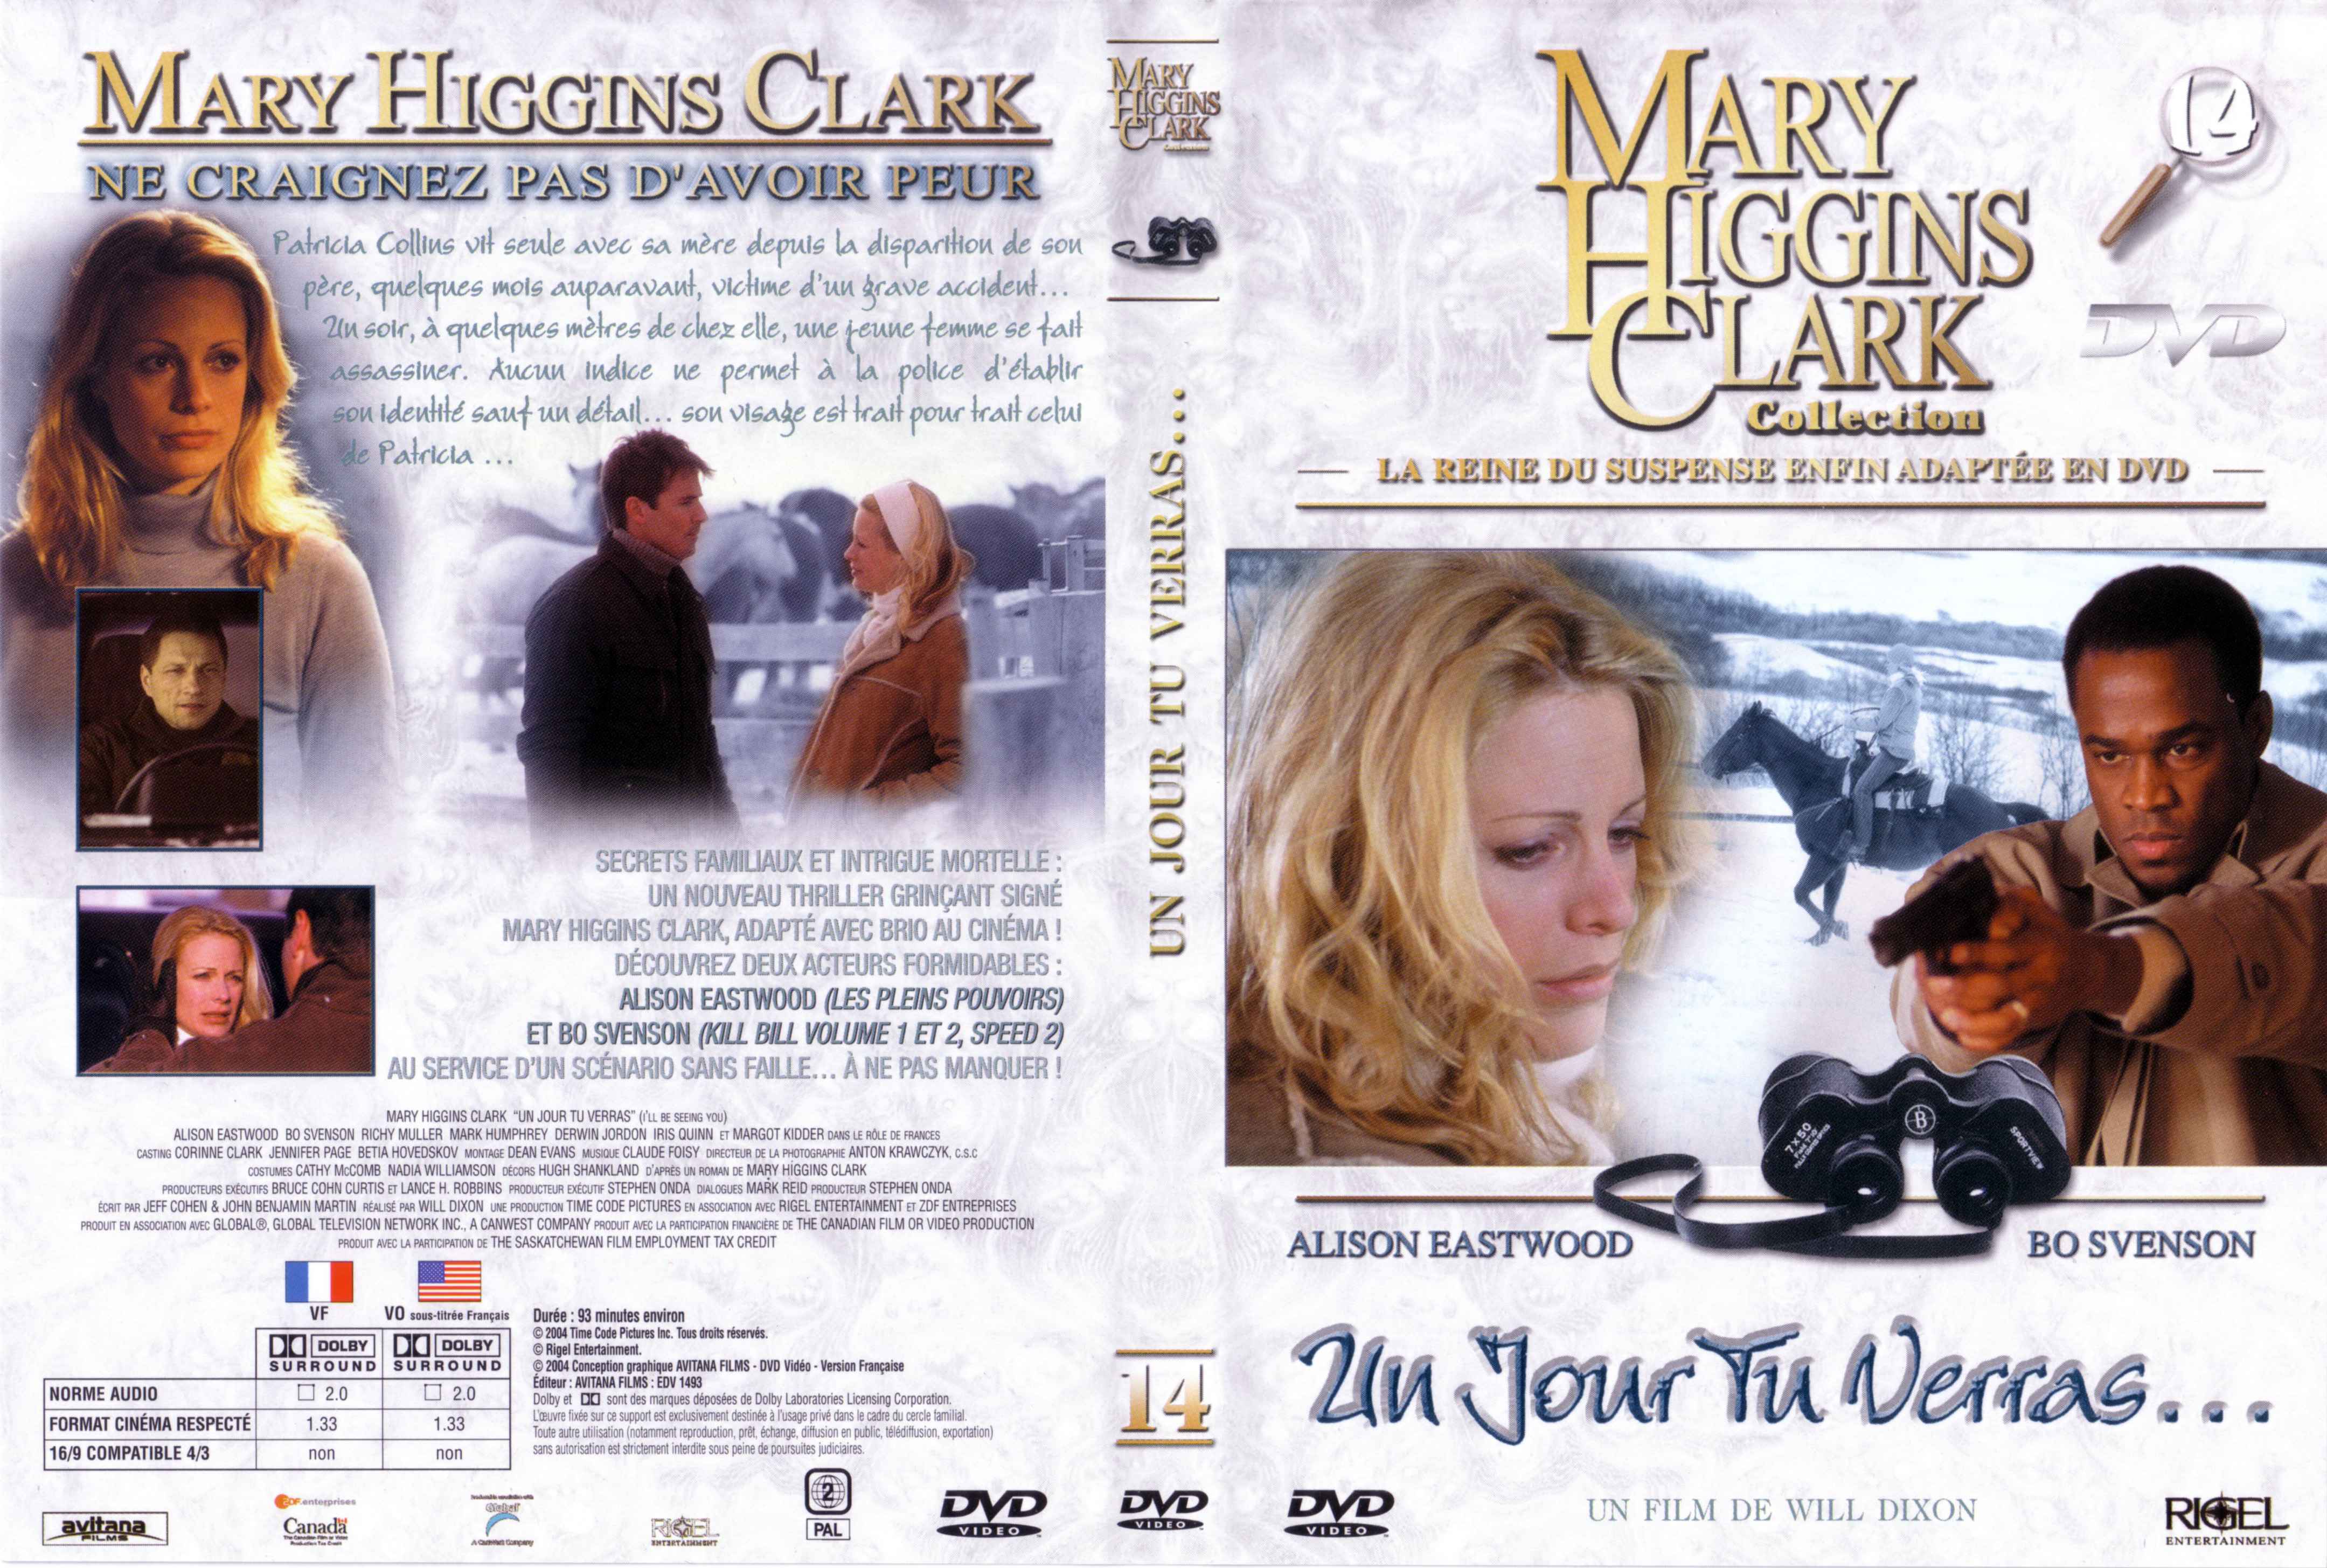 Jaquette DVD Mary Higgins Clark vol 14 - Un jour tu verras